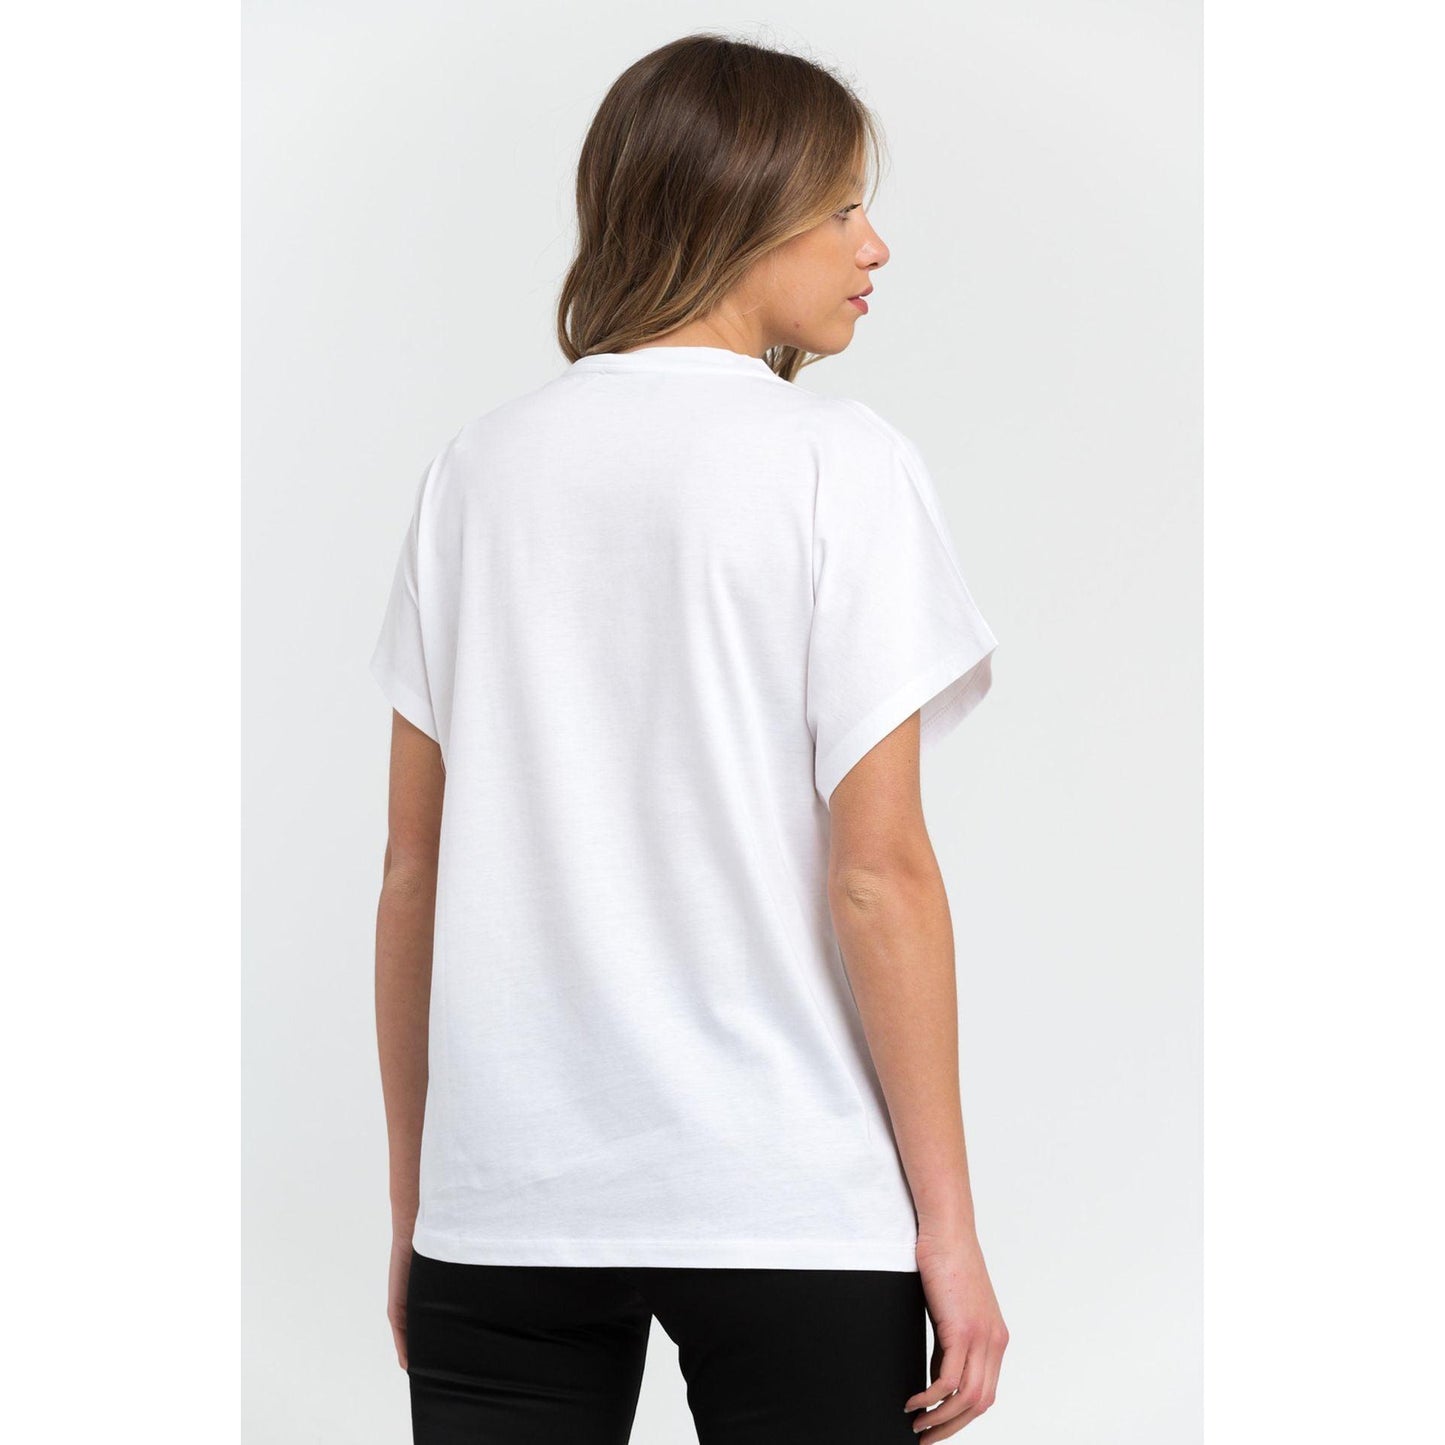 Trussardi Women T-Shirts - White Brand T-shirts - T-Shirt - Guocali